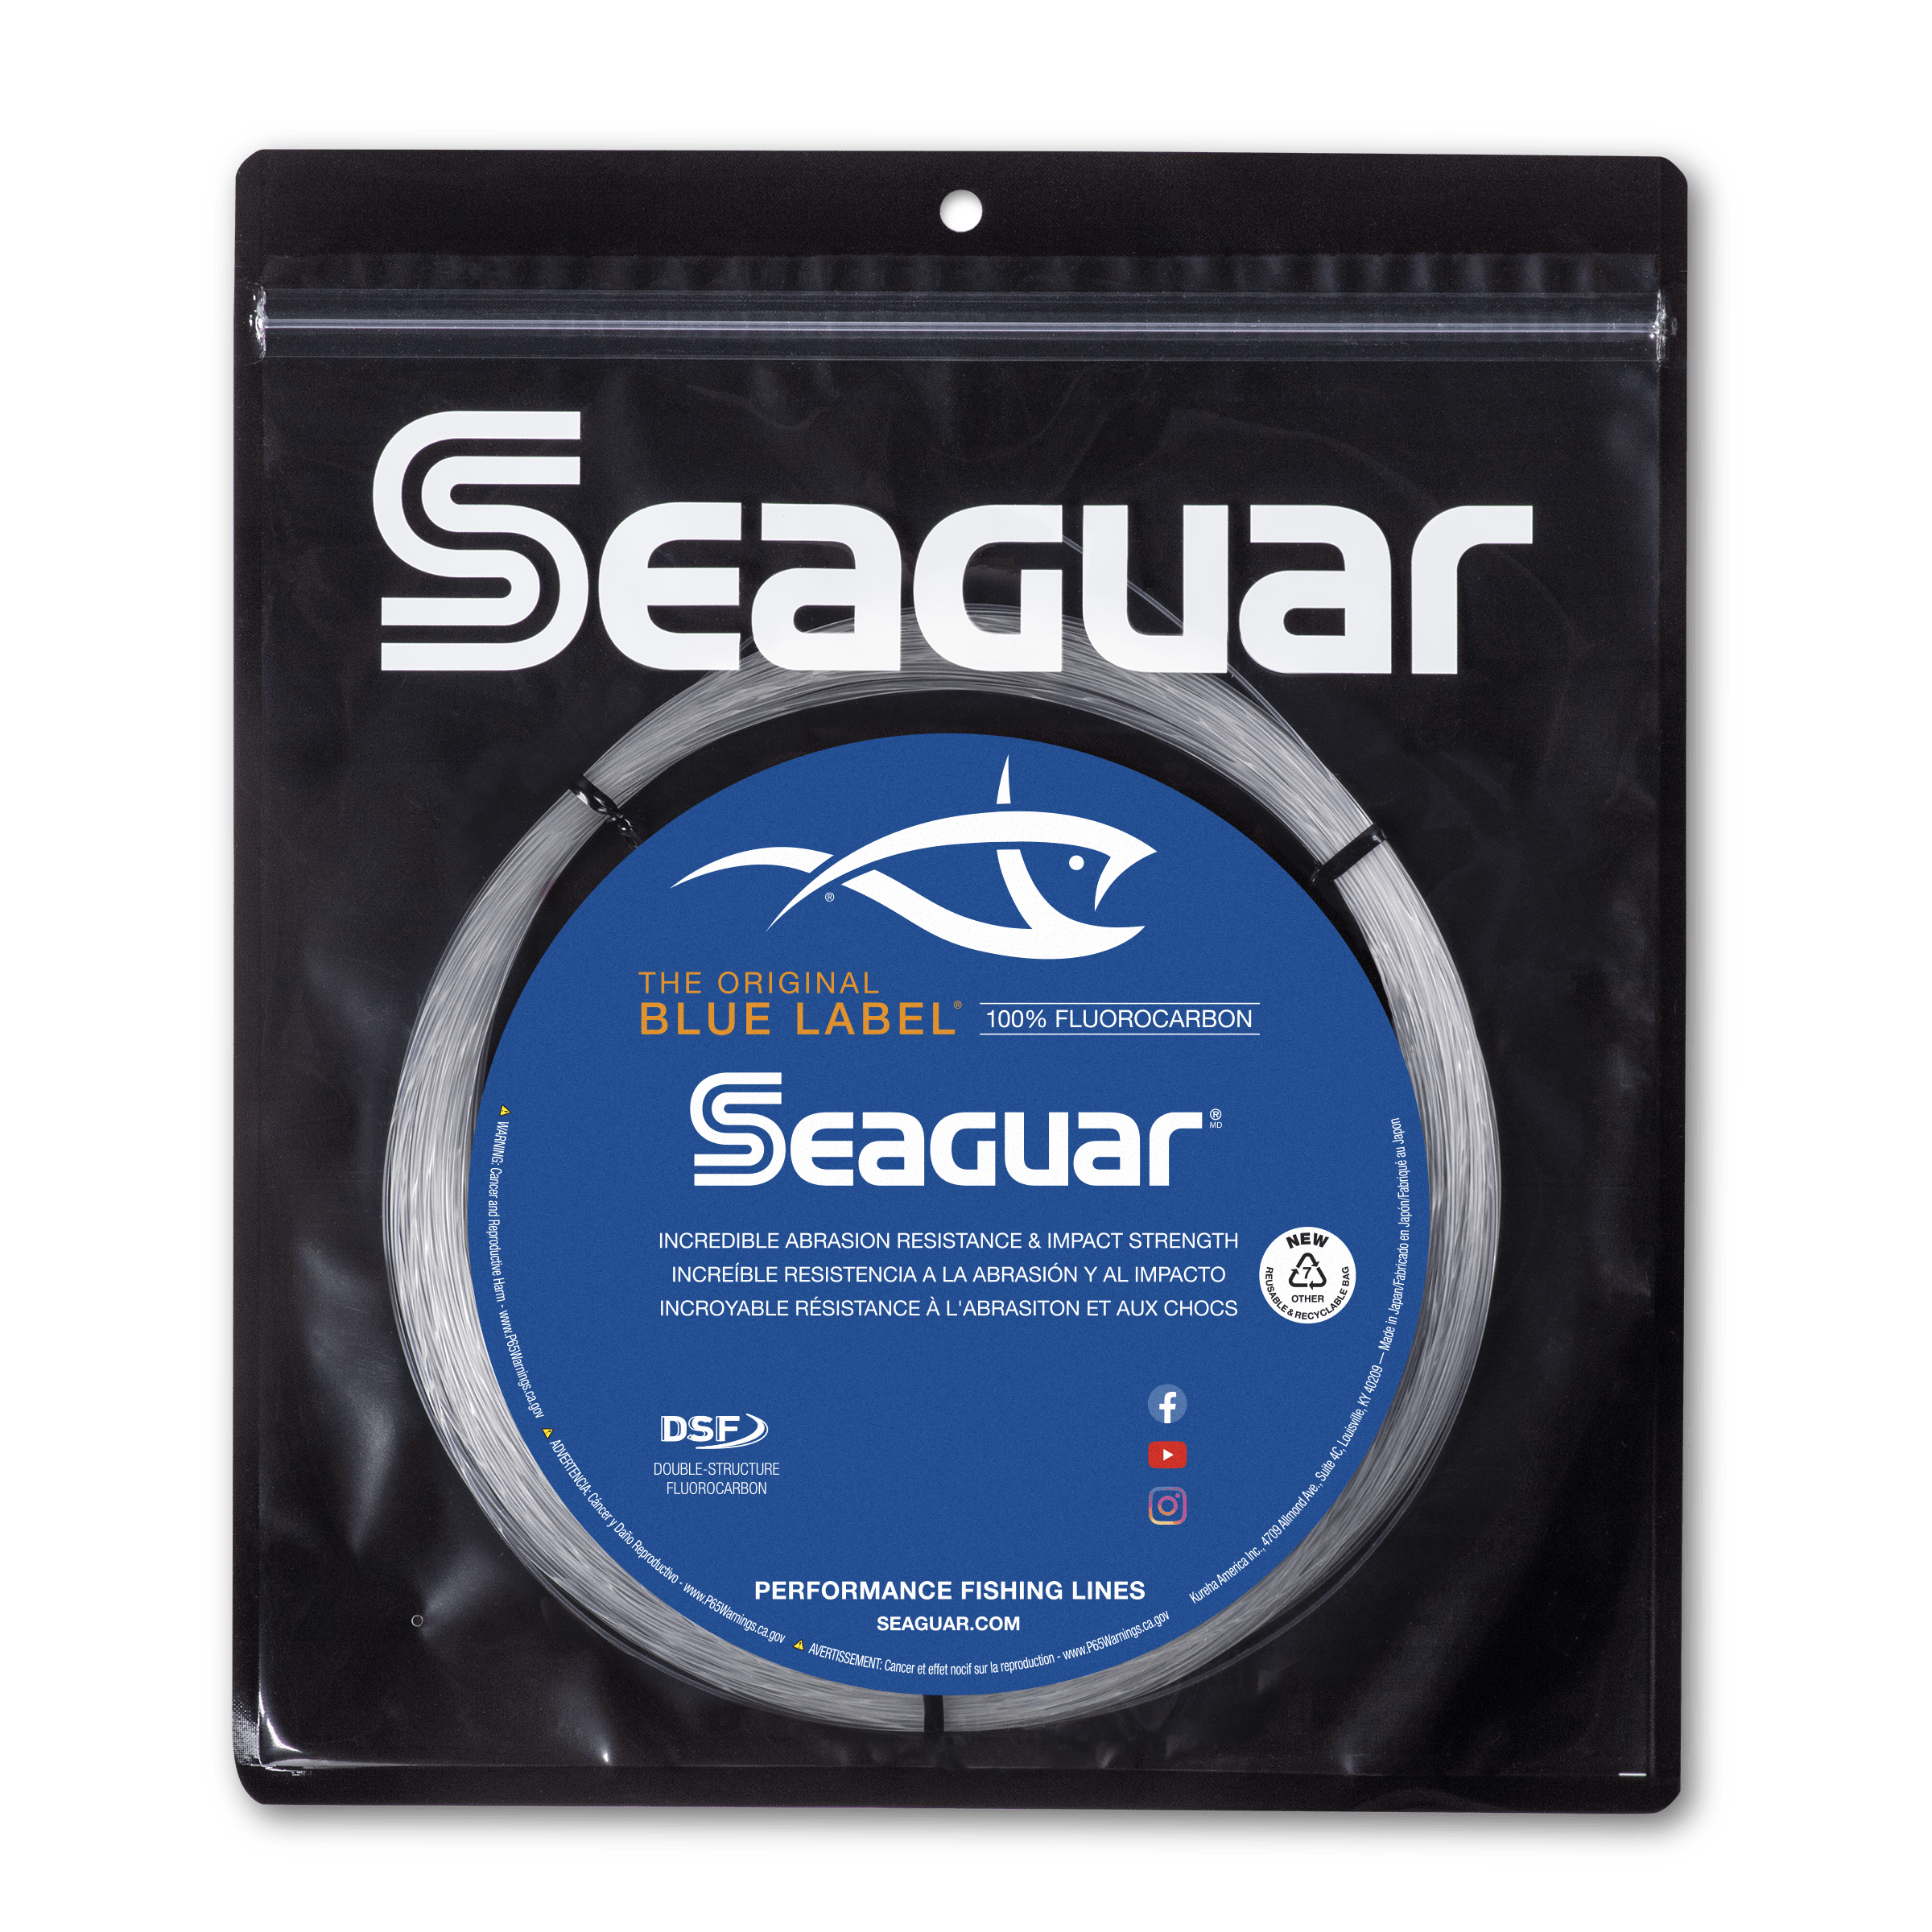 SEAGUAR RED LABEL Fluorocarbon Freshwater & Saltwater Fishing Line